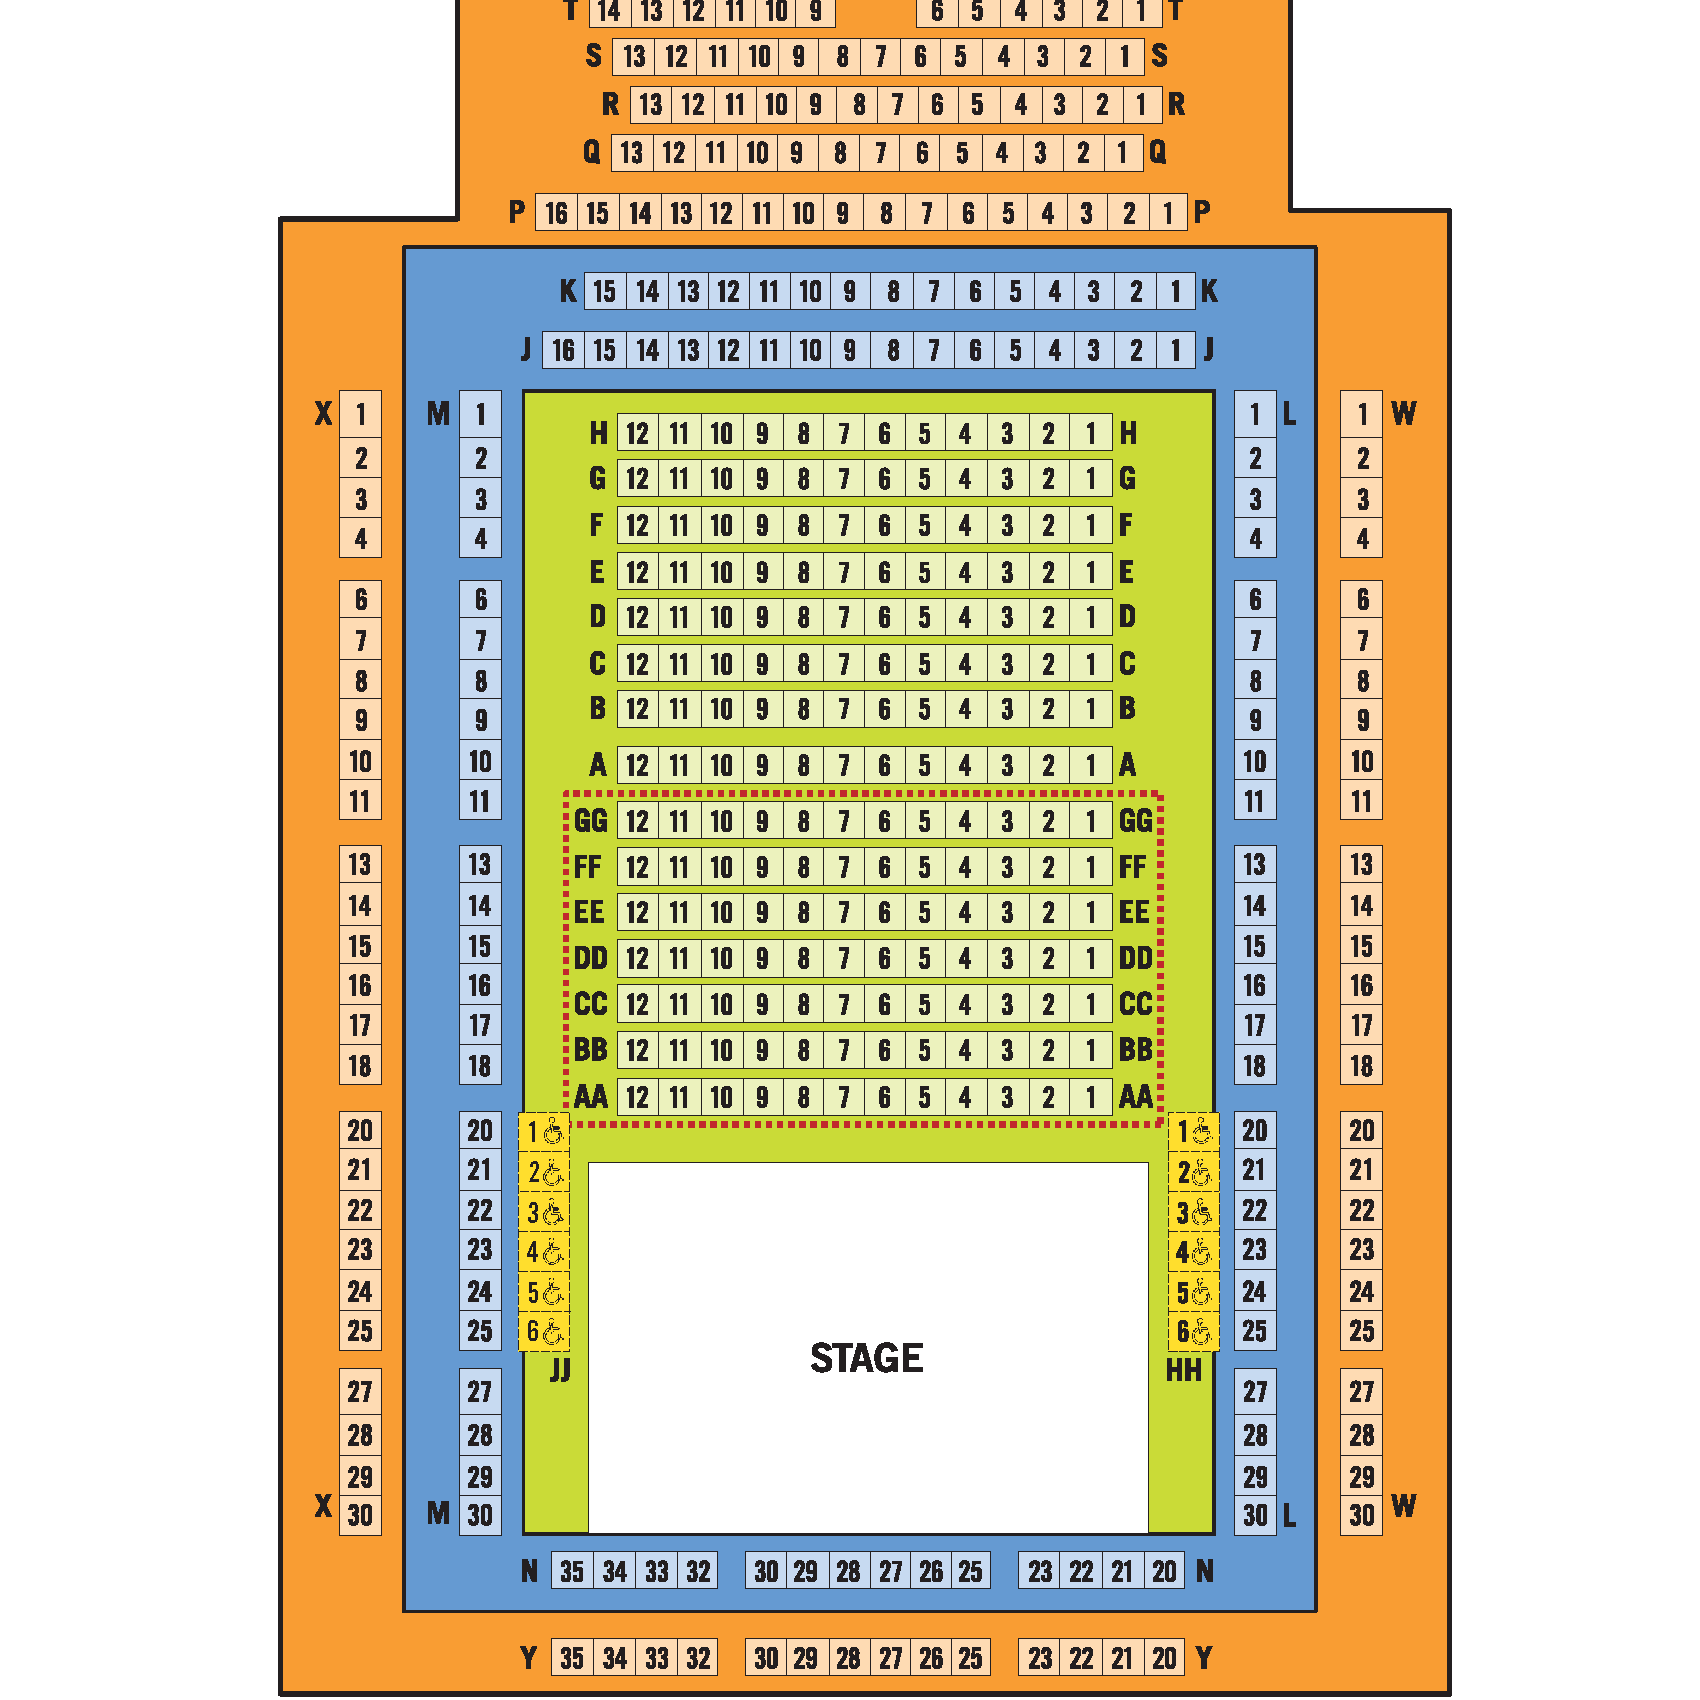 Fleck Dance Theatre Seating Chart